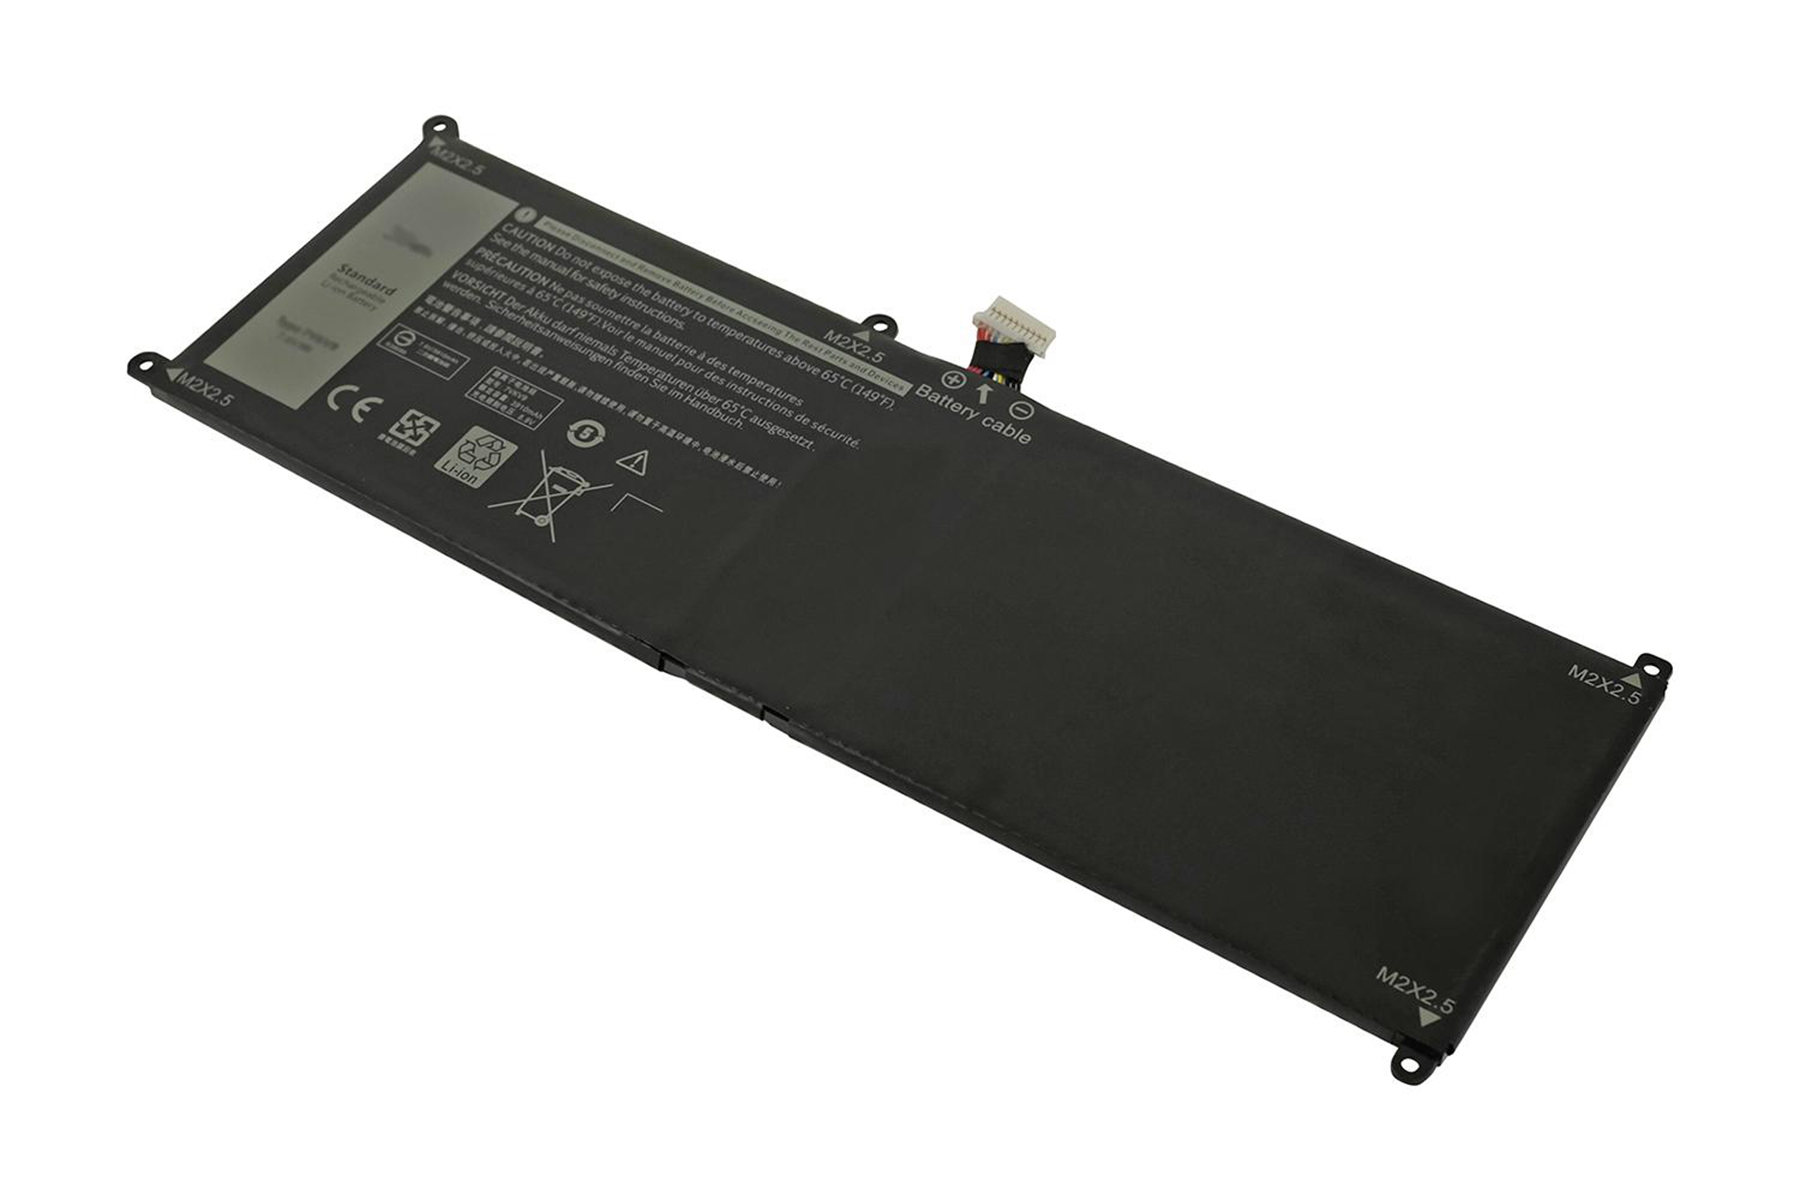 Volt, für Laptop POWERSMART 7.60 Dell Li-Polymer XPS mAh 4000 Akku, 12-9250-D4305TB